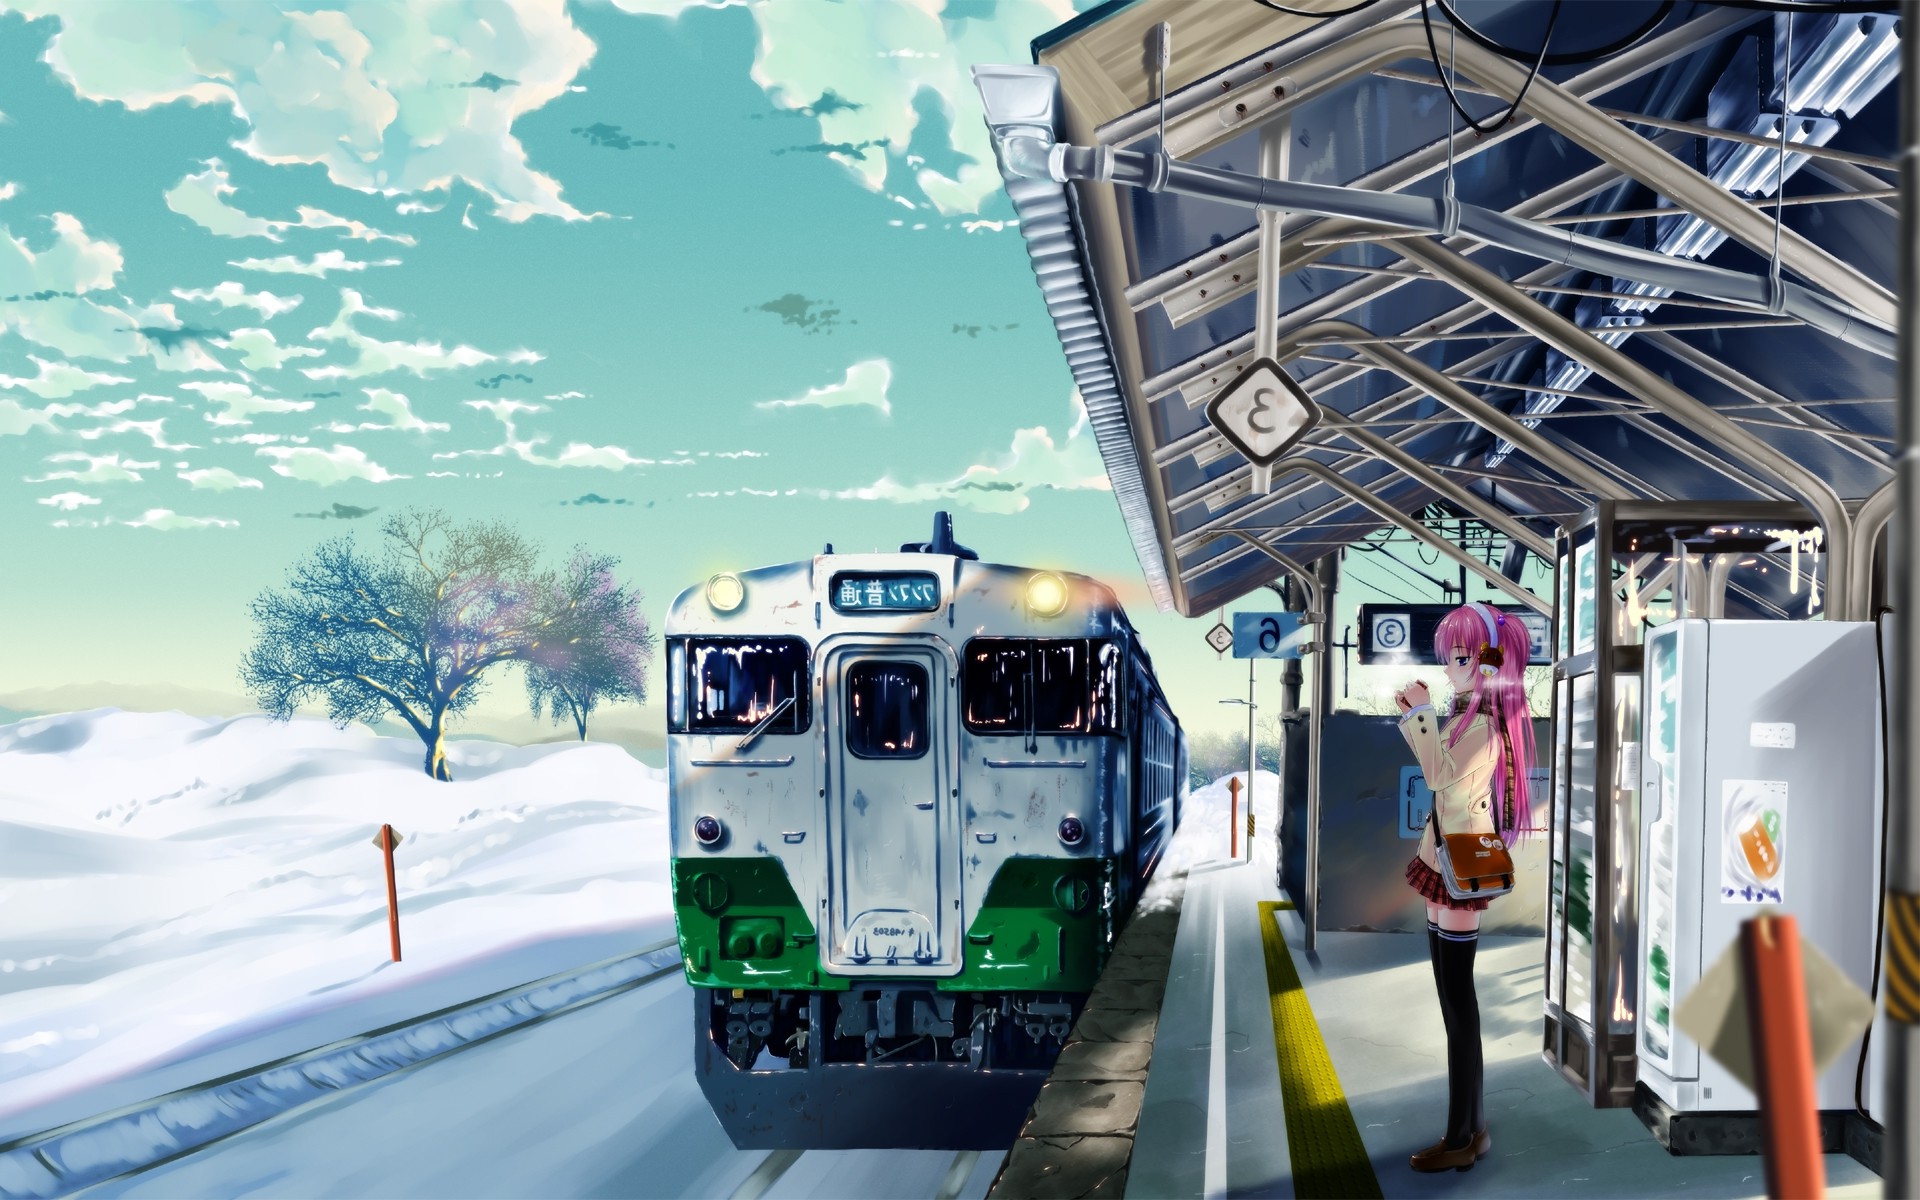 Train Station  Background Illustration Art by doodlespace on DeviantArt